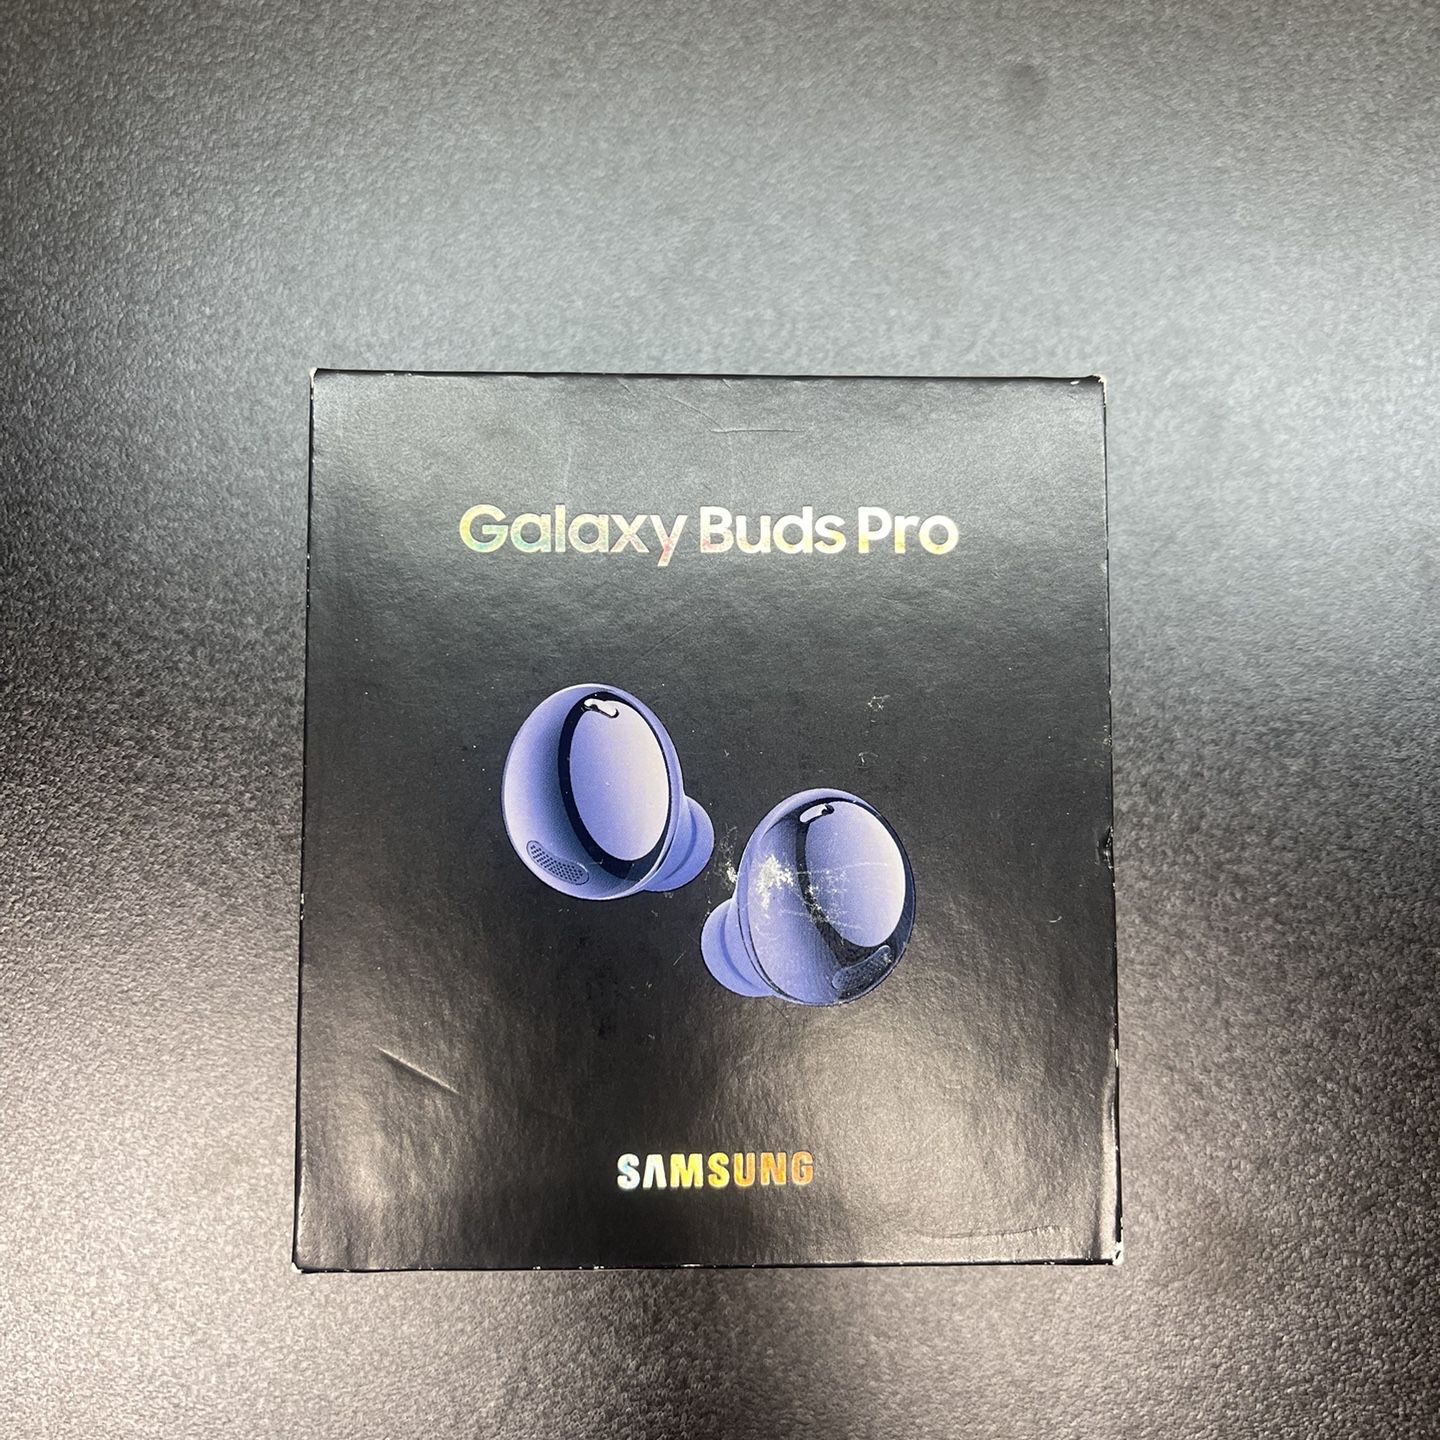 Galaxy Buds Pro True Wireless Earbuds - Violet